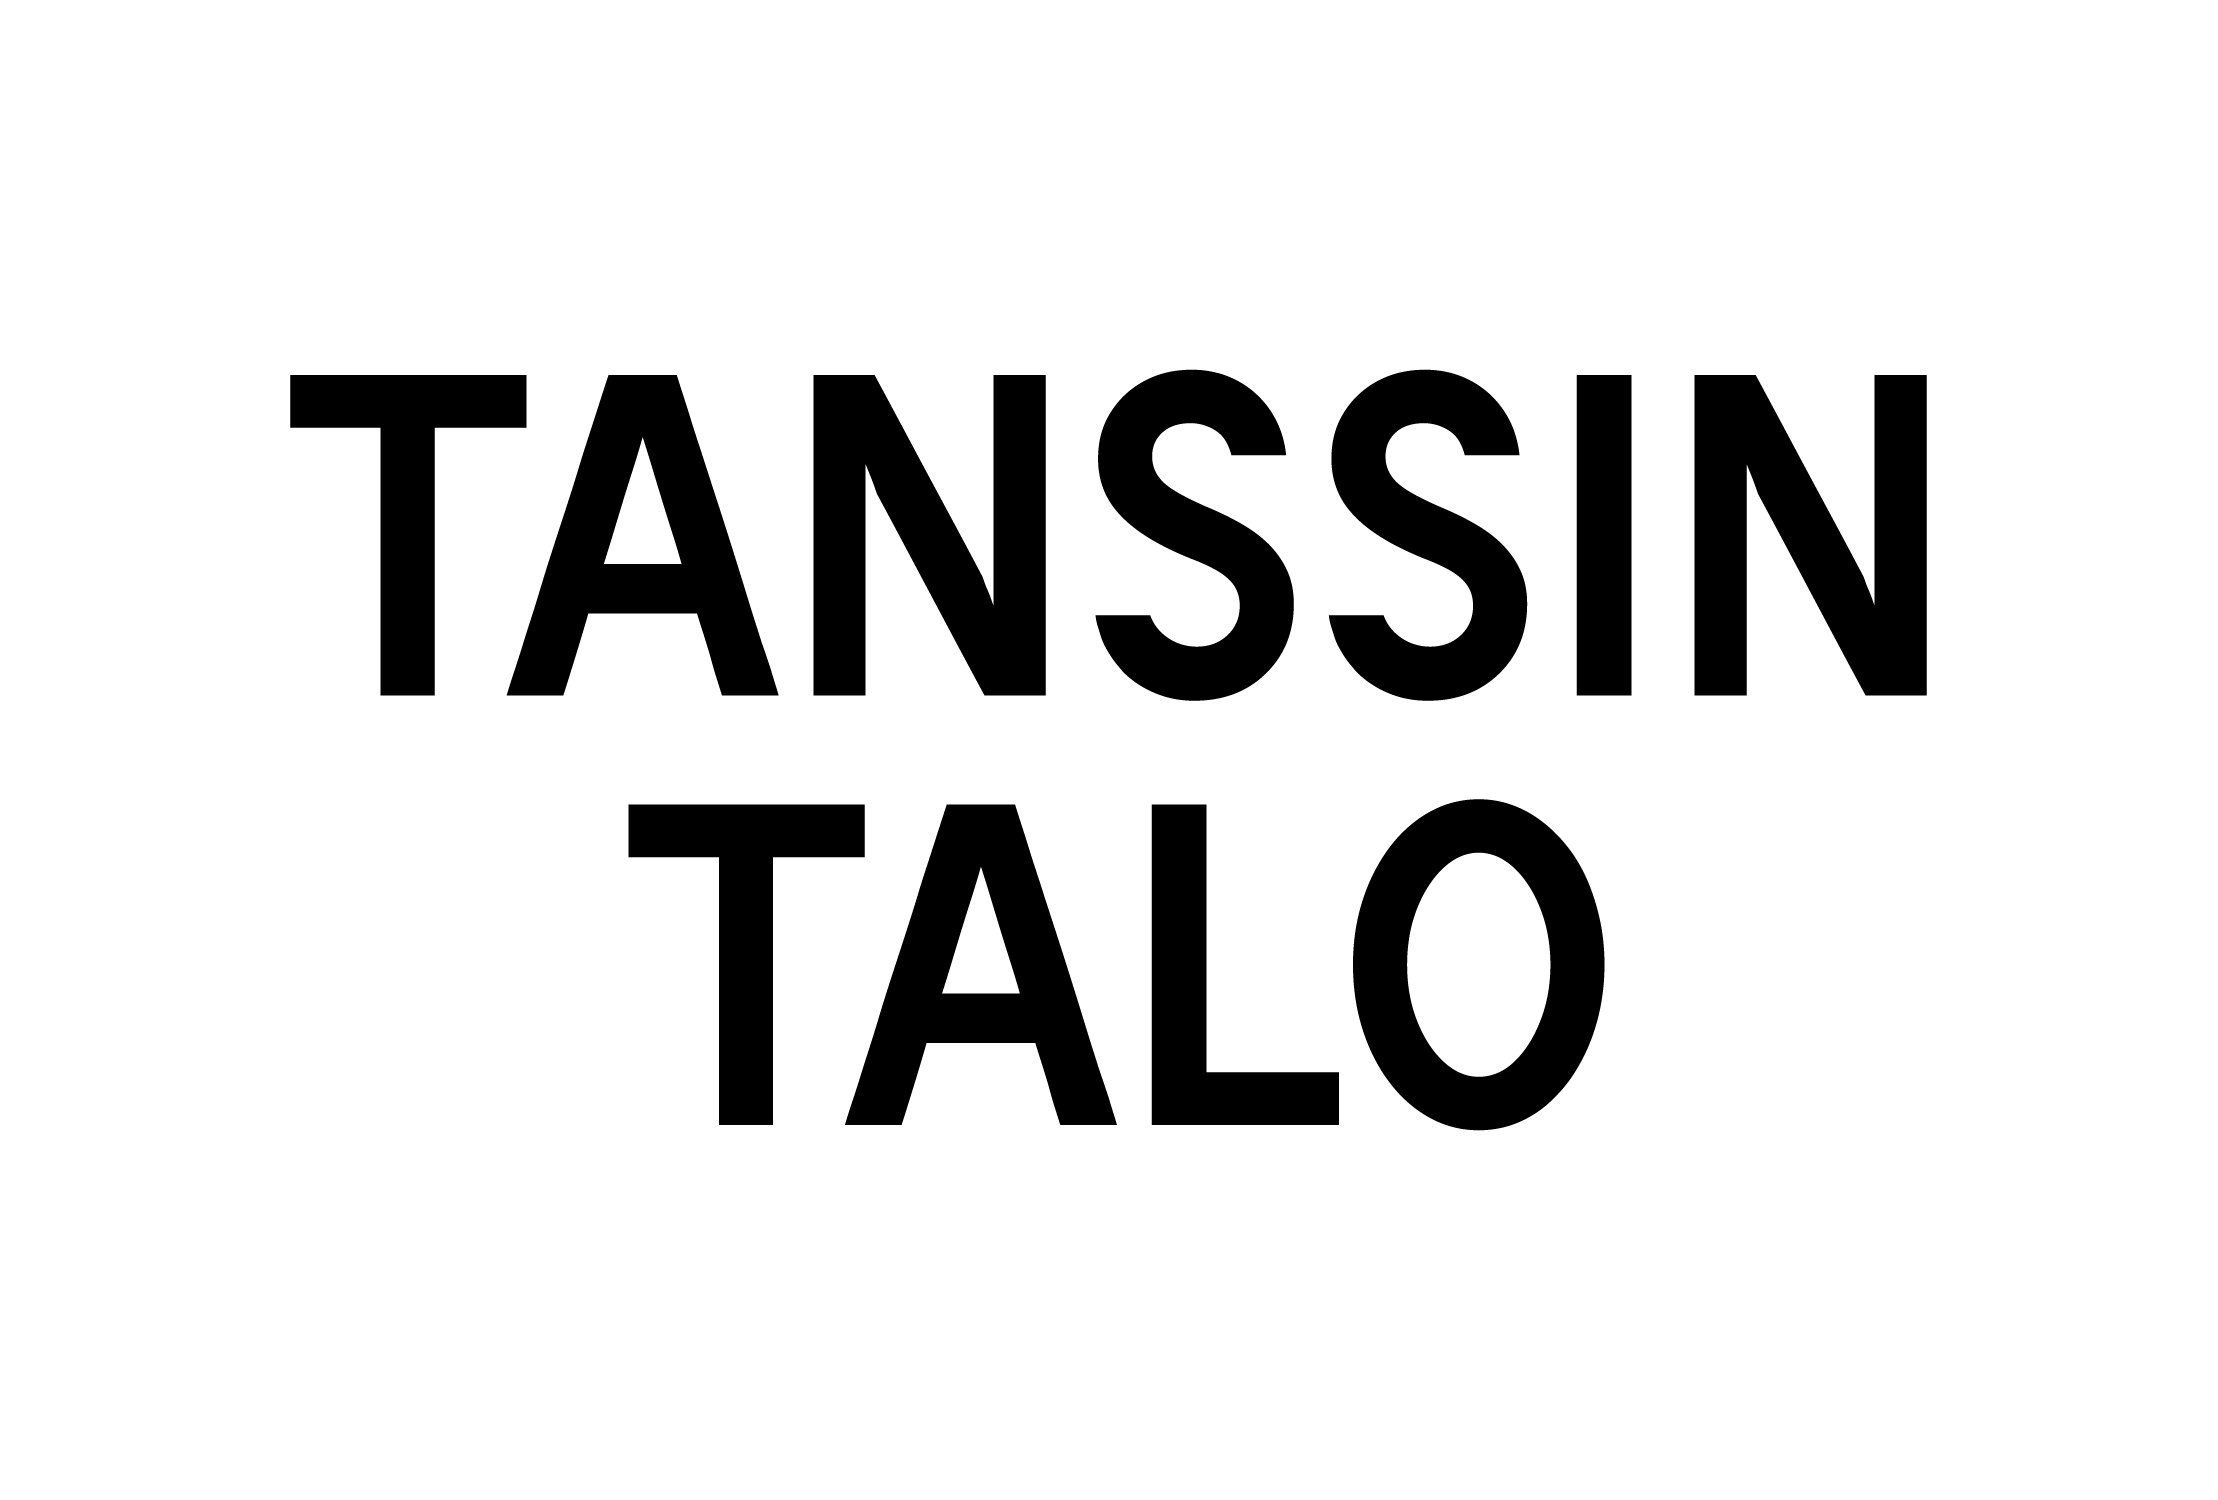 Tanssintalo logo text